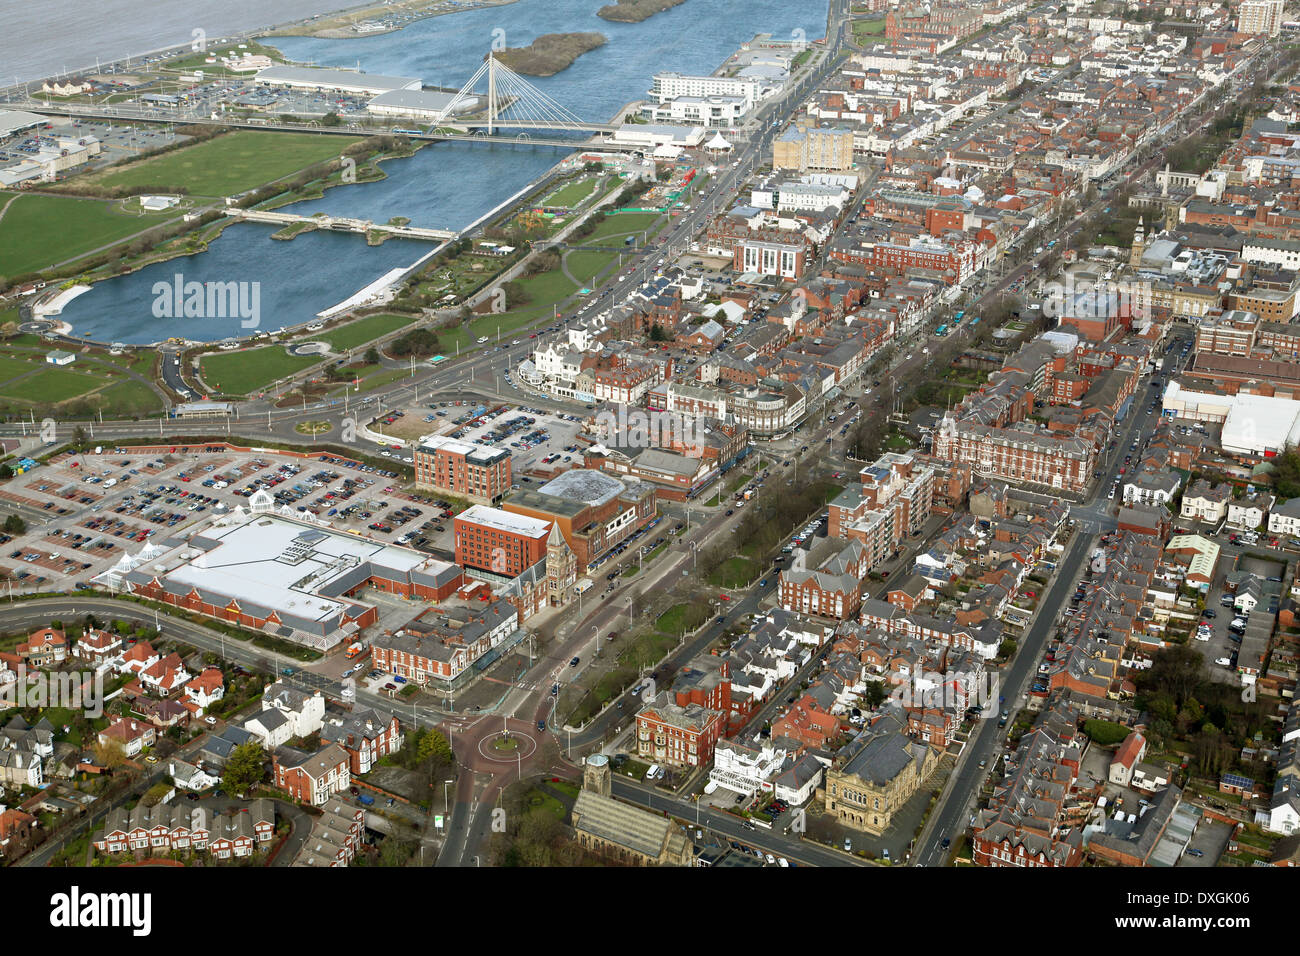 Vista aérea de la ciudad costera de Southport, Lancashire Foto de stock